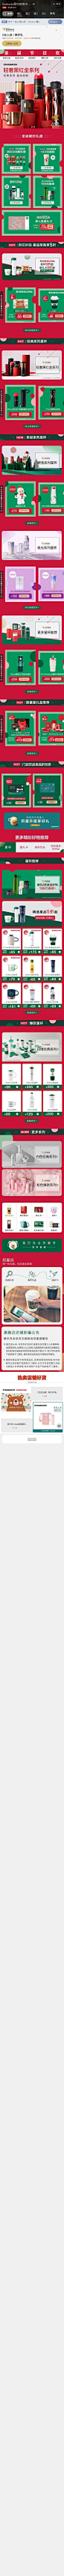 Starbucks星巴克官方旗舰店_1606668692.jpg (750×30000)